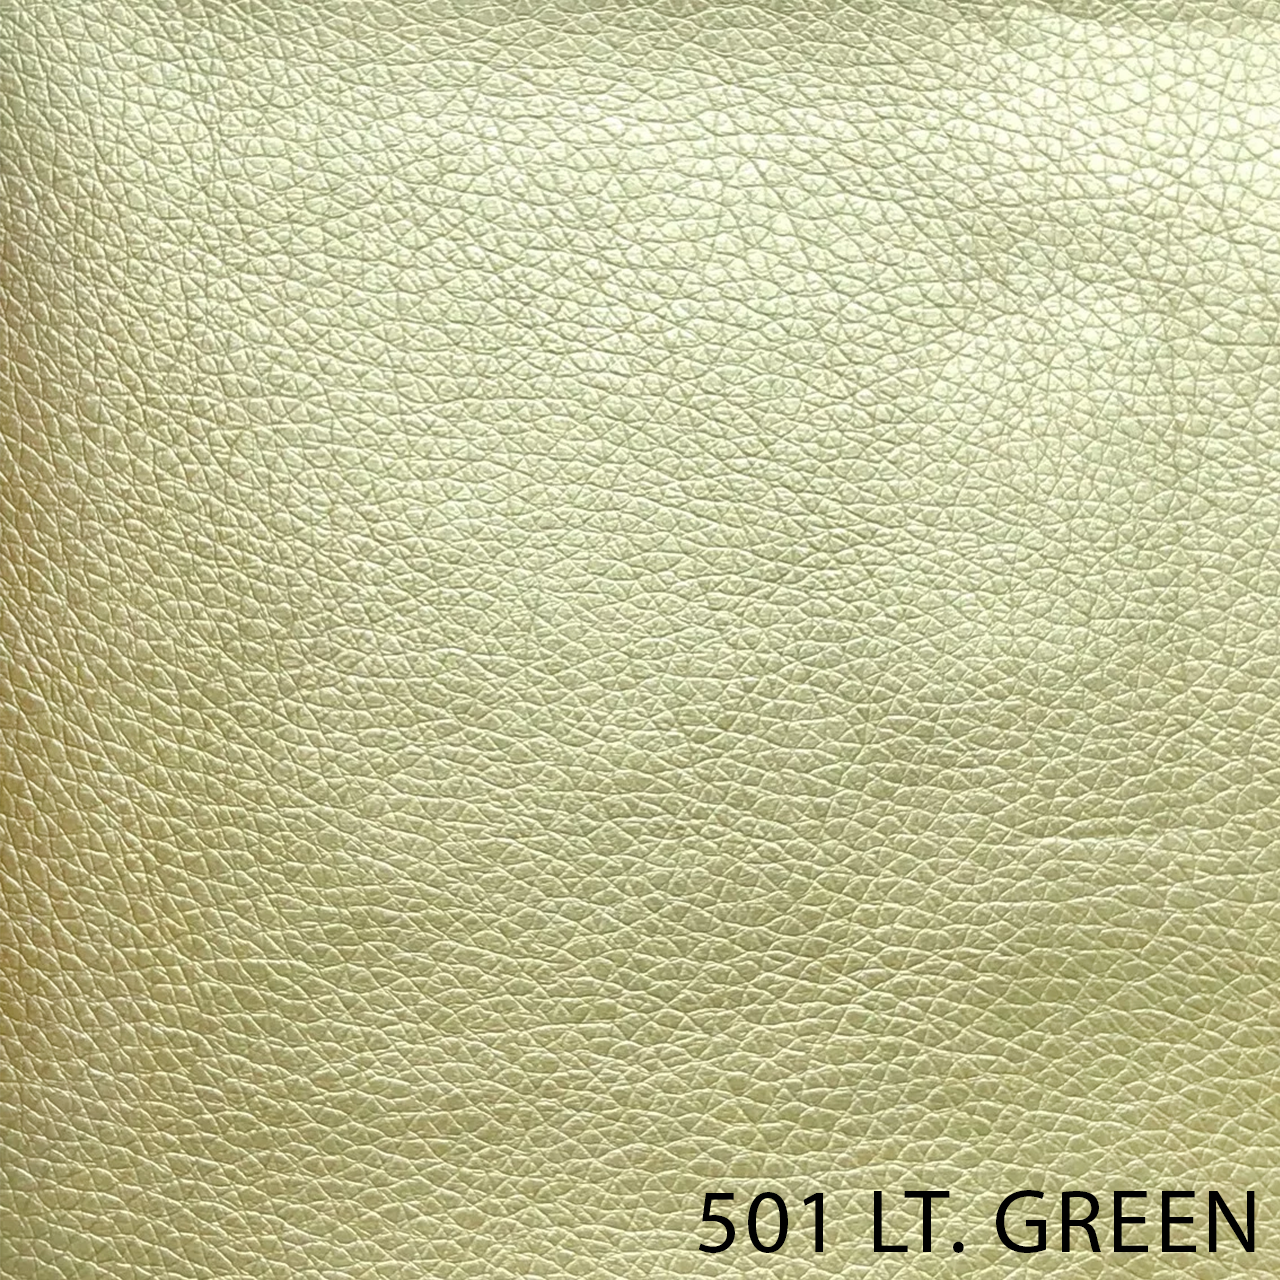 501 LT. GREEN